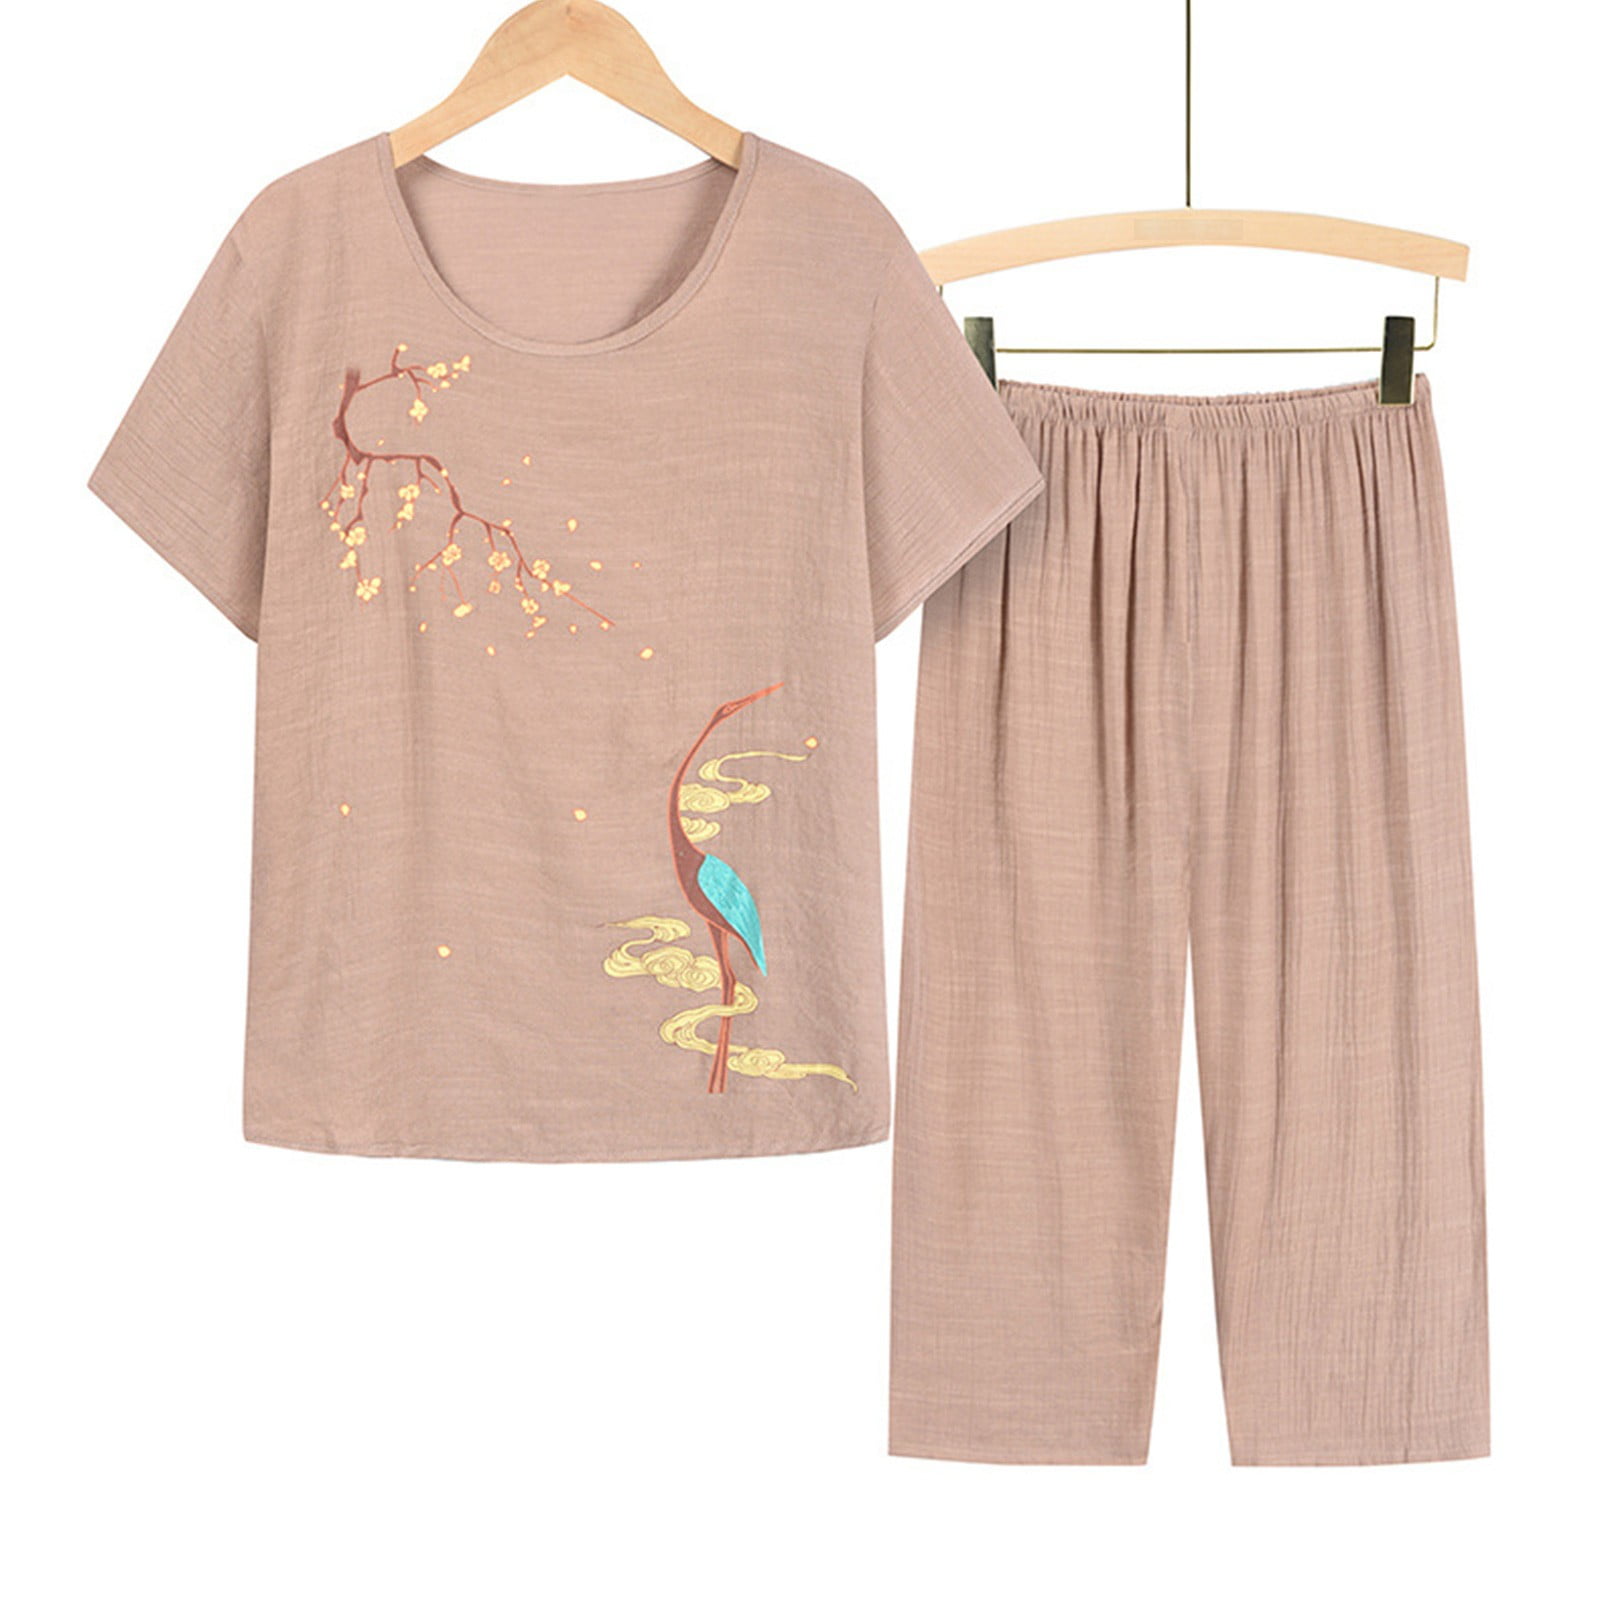 JNGSA Women's Capri Pajama Sets Plus Size Sleepwear Top and Capri Loose ...